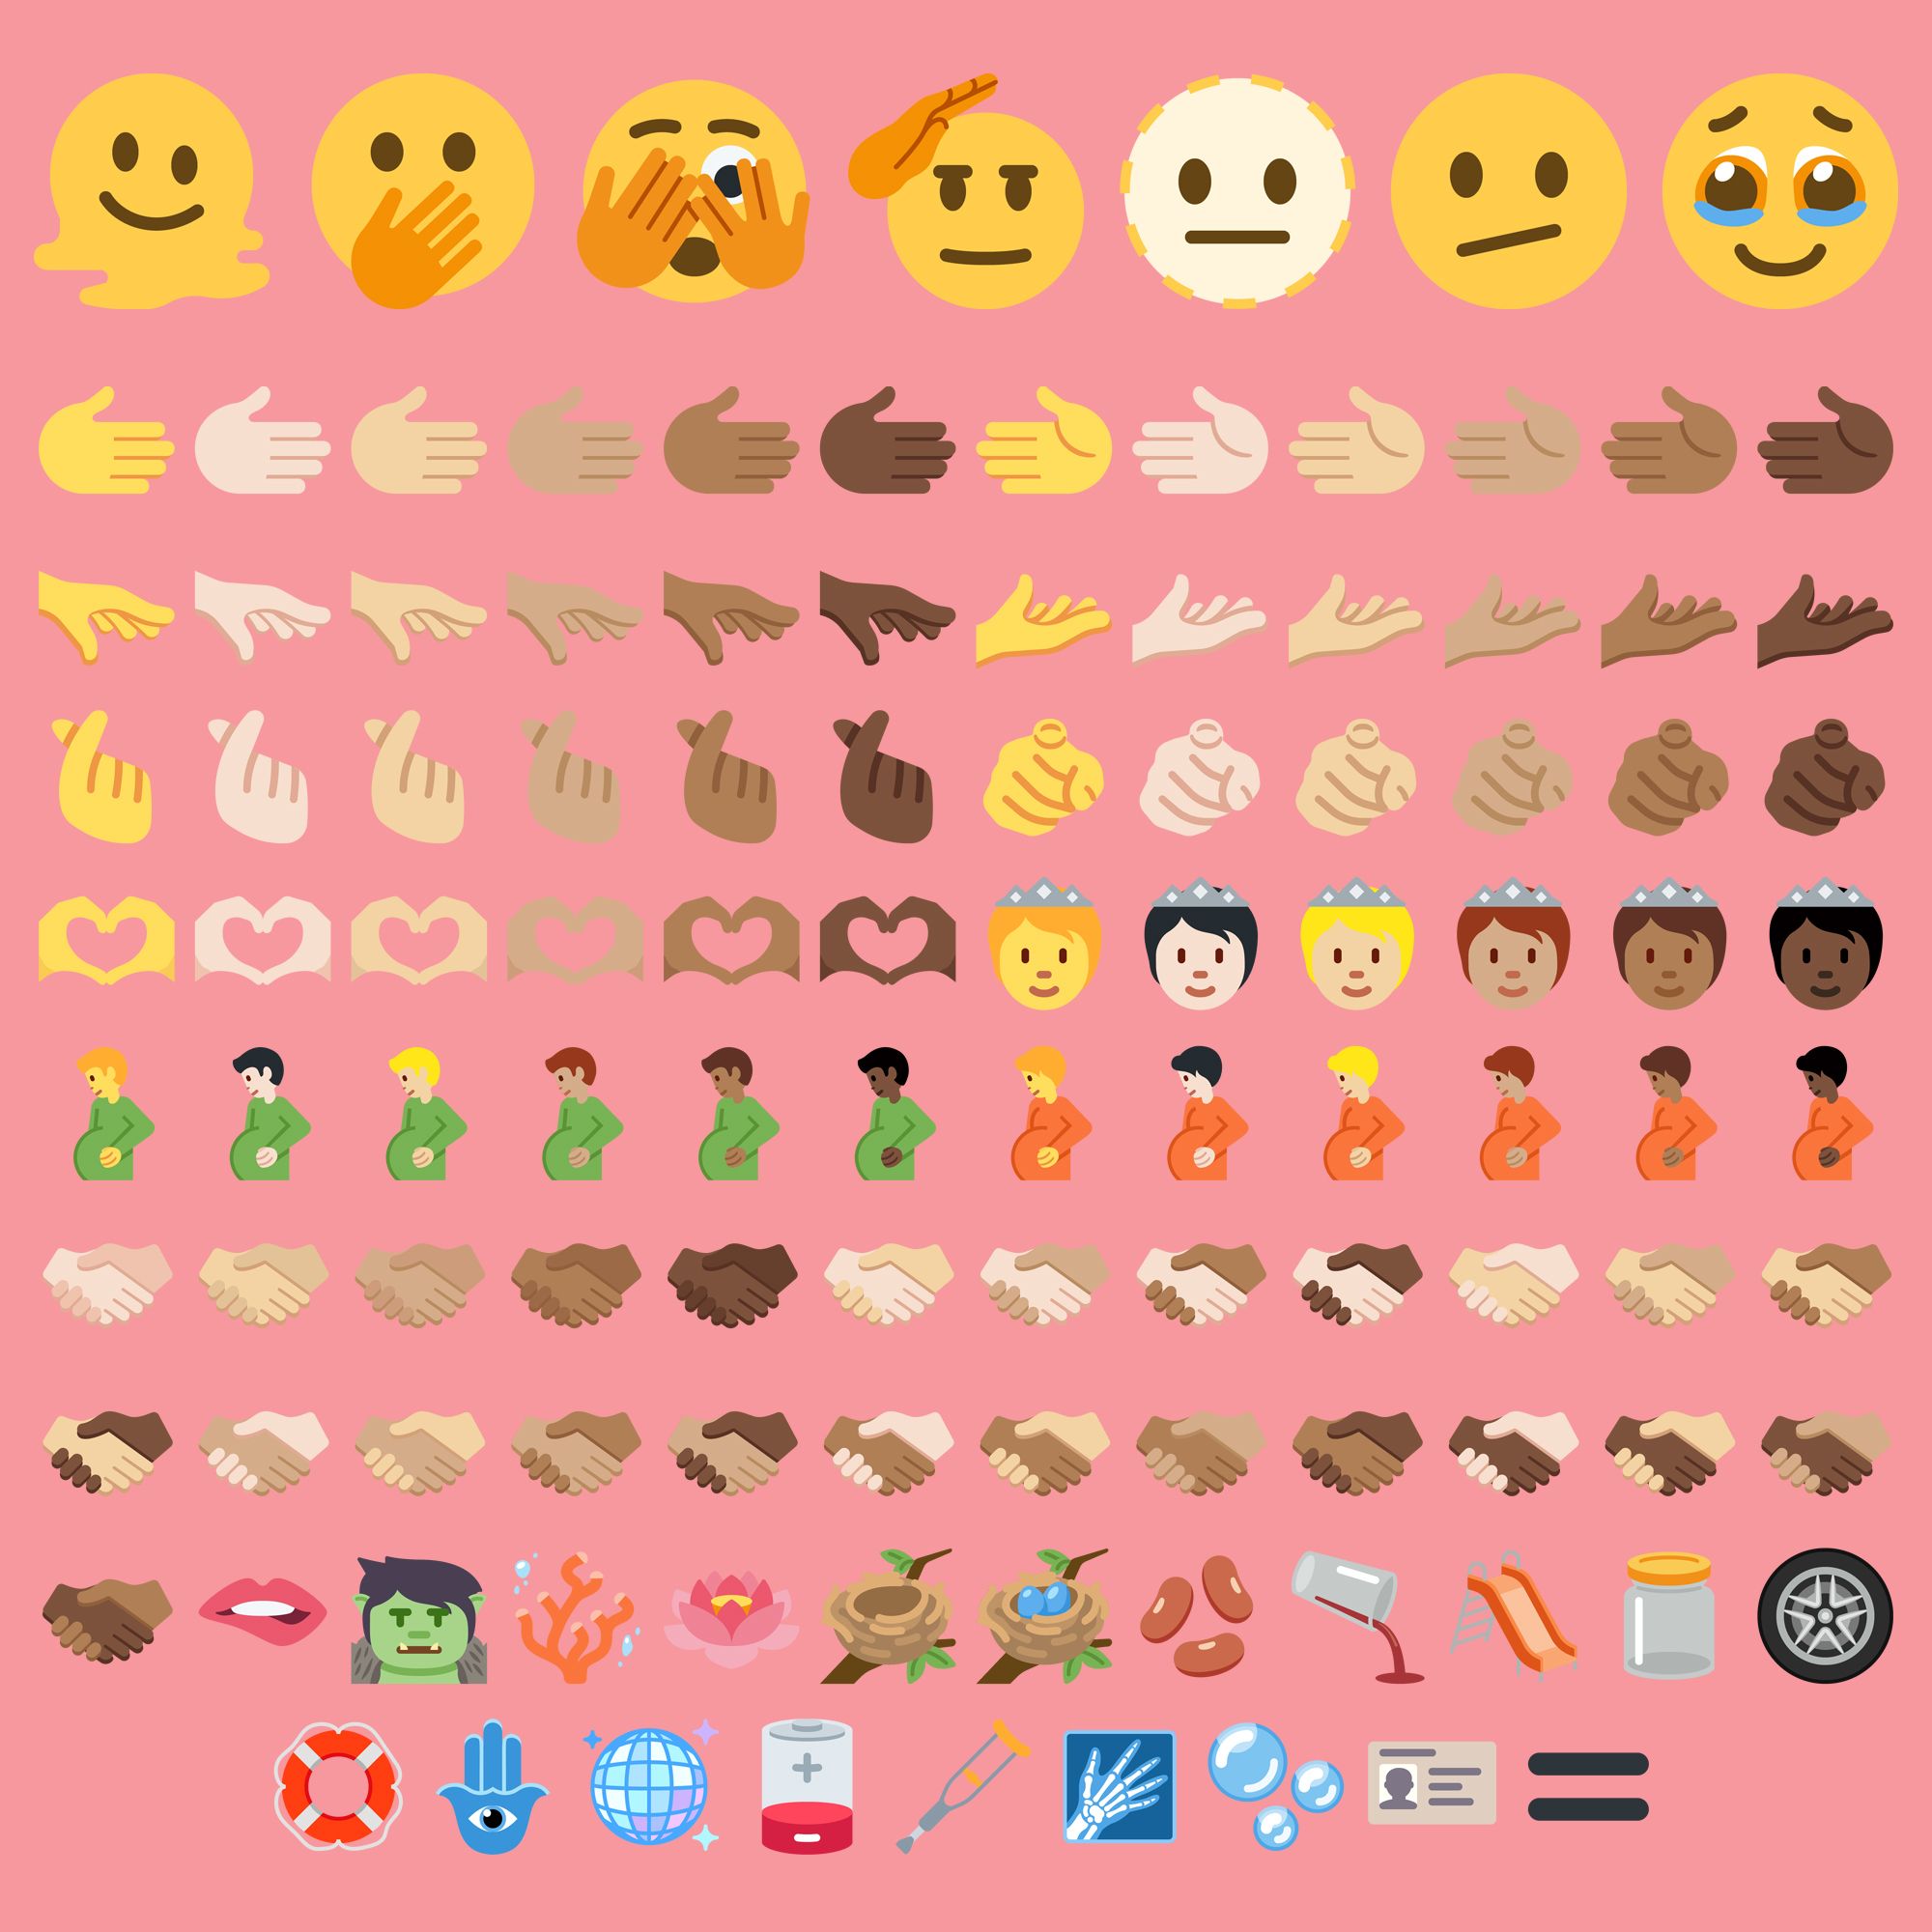 In iOS, the handshake emoji is the only skin-based emoji where you